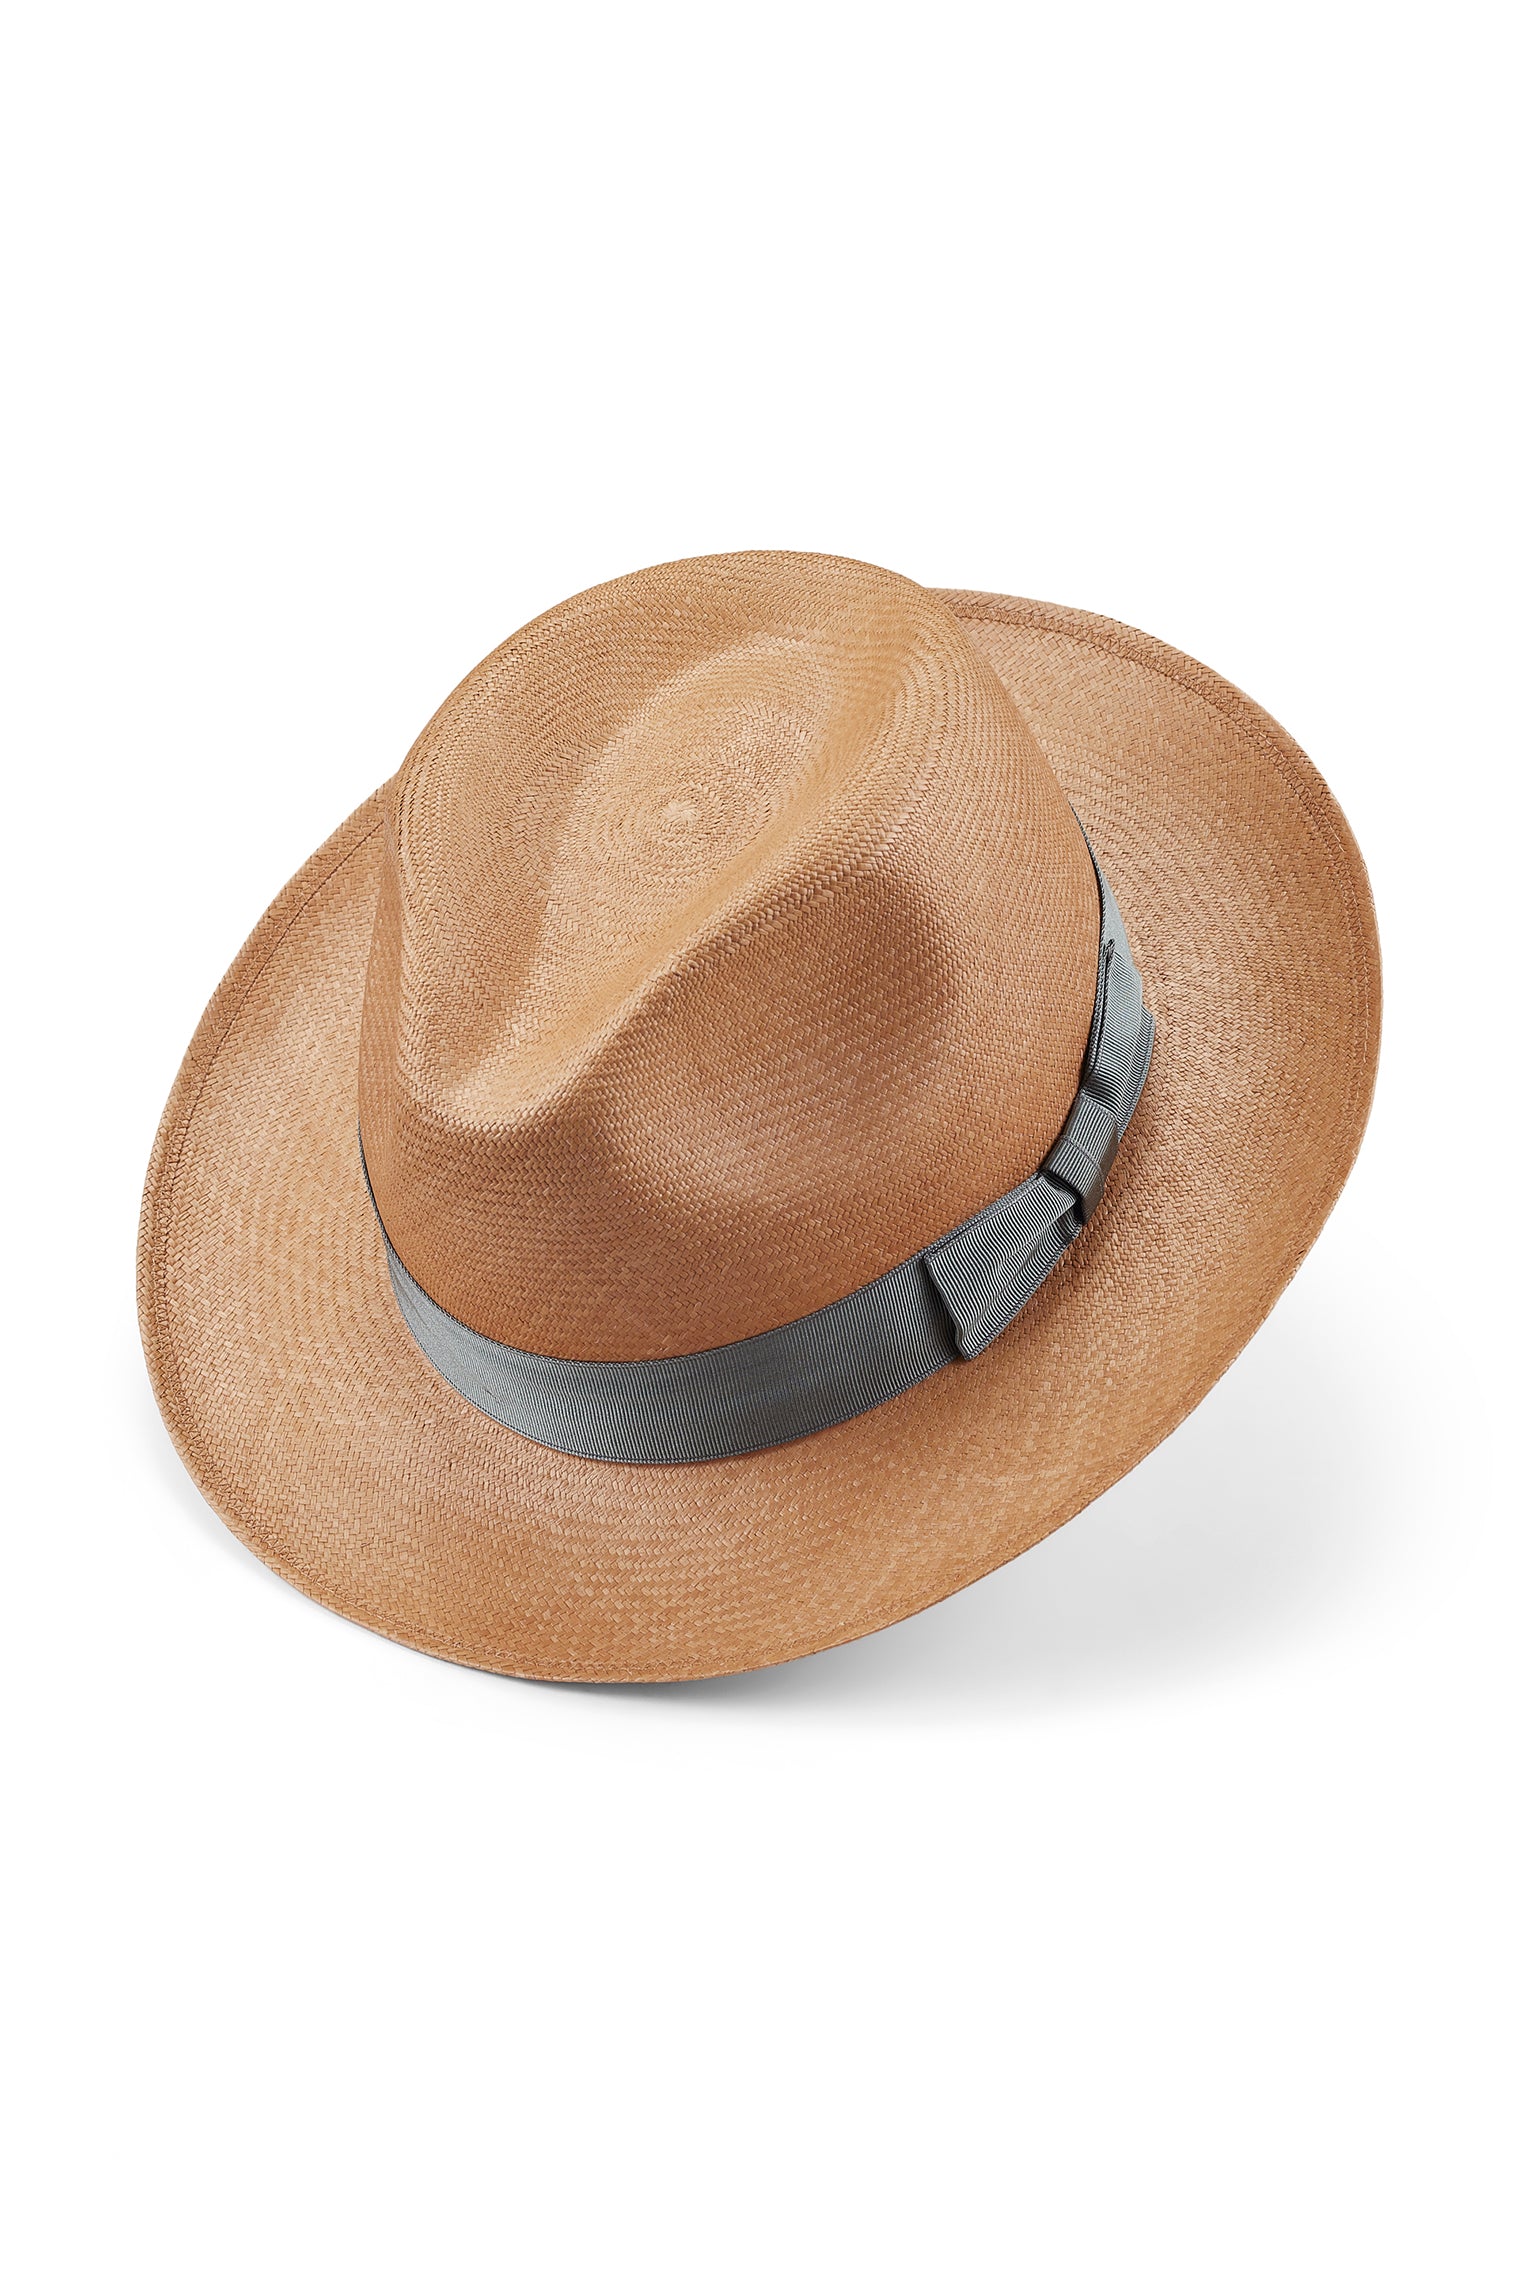 Fairbanks Mocha Panama - New Season Hat Collection - Lock & Co. Hatters London UK